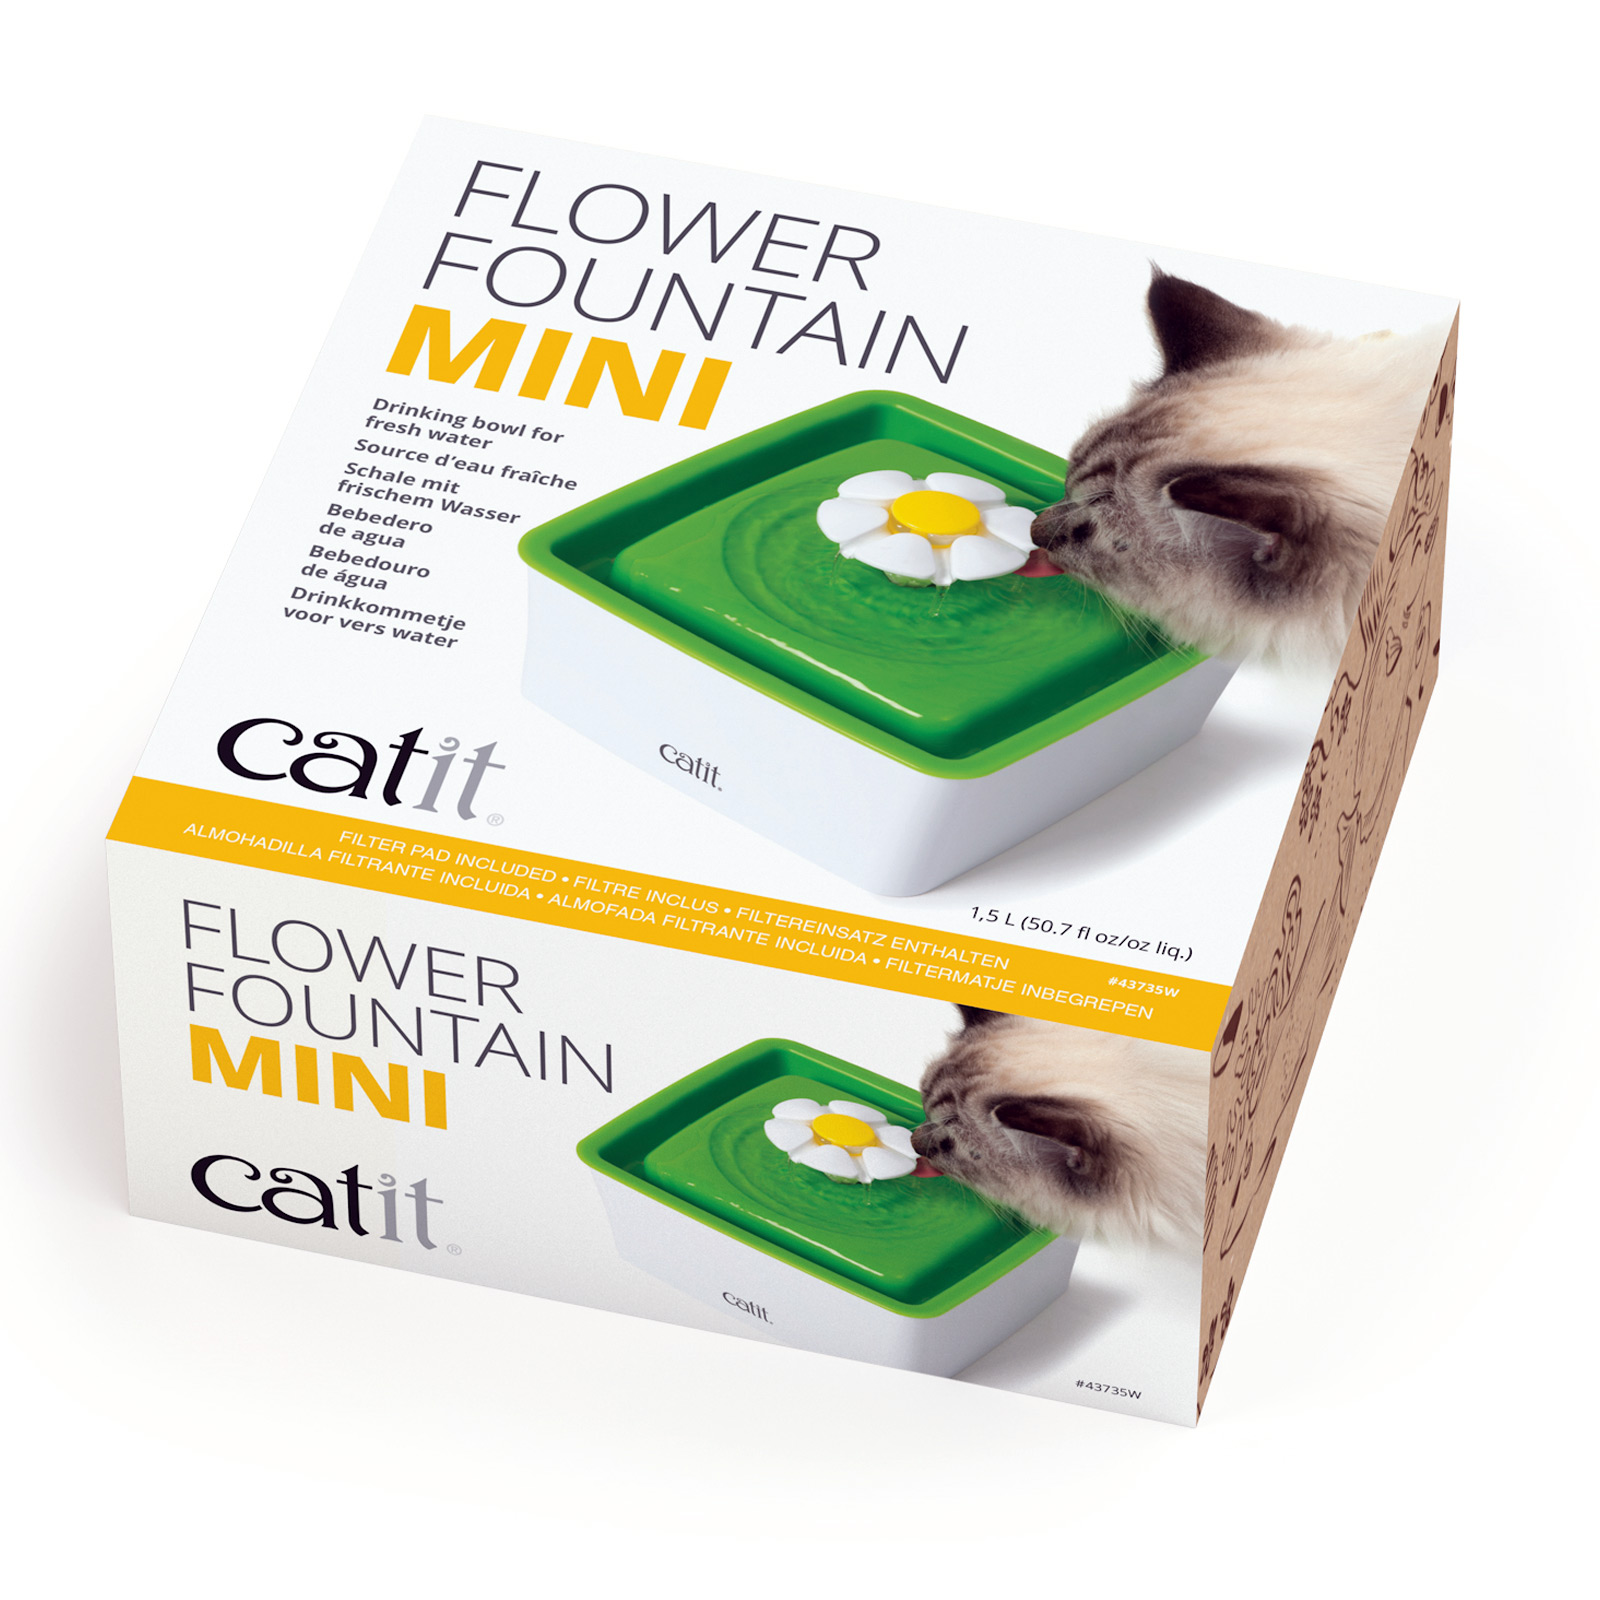 Catit 2.0 - Senses Flower Design Pet Cat Water Fountain Mini - 1.5 Litre image 2